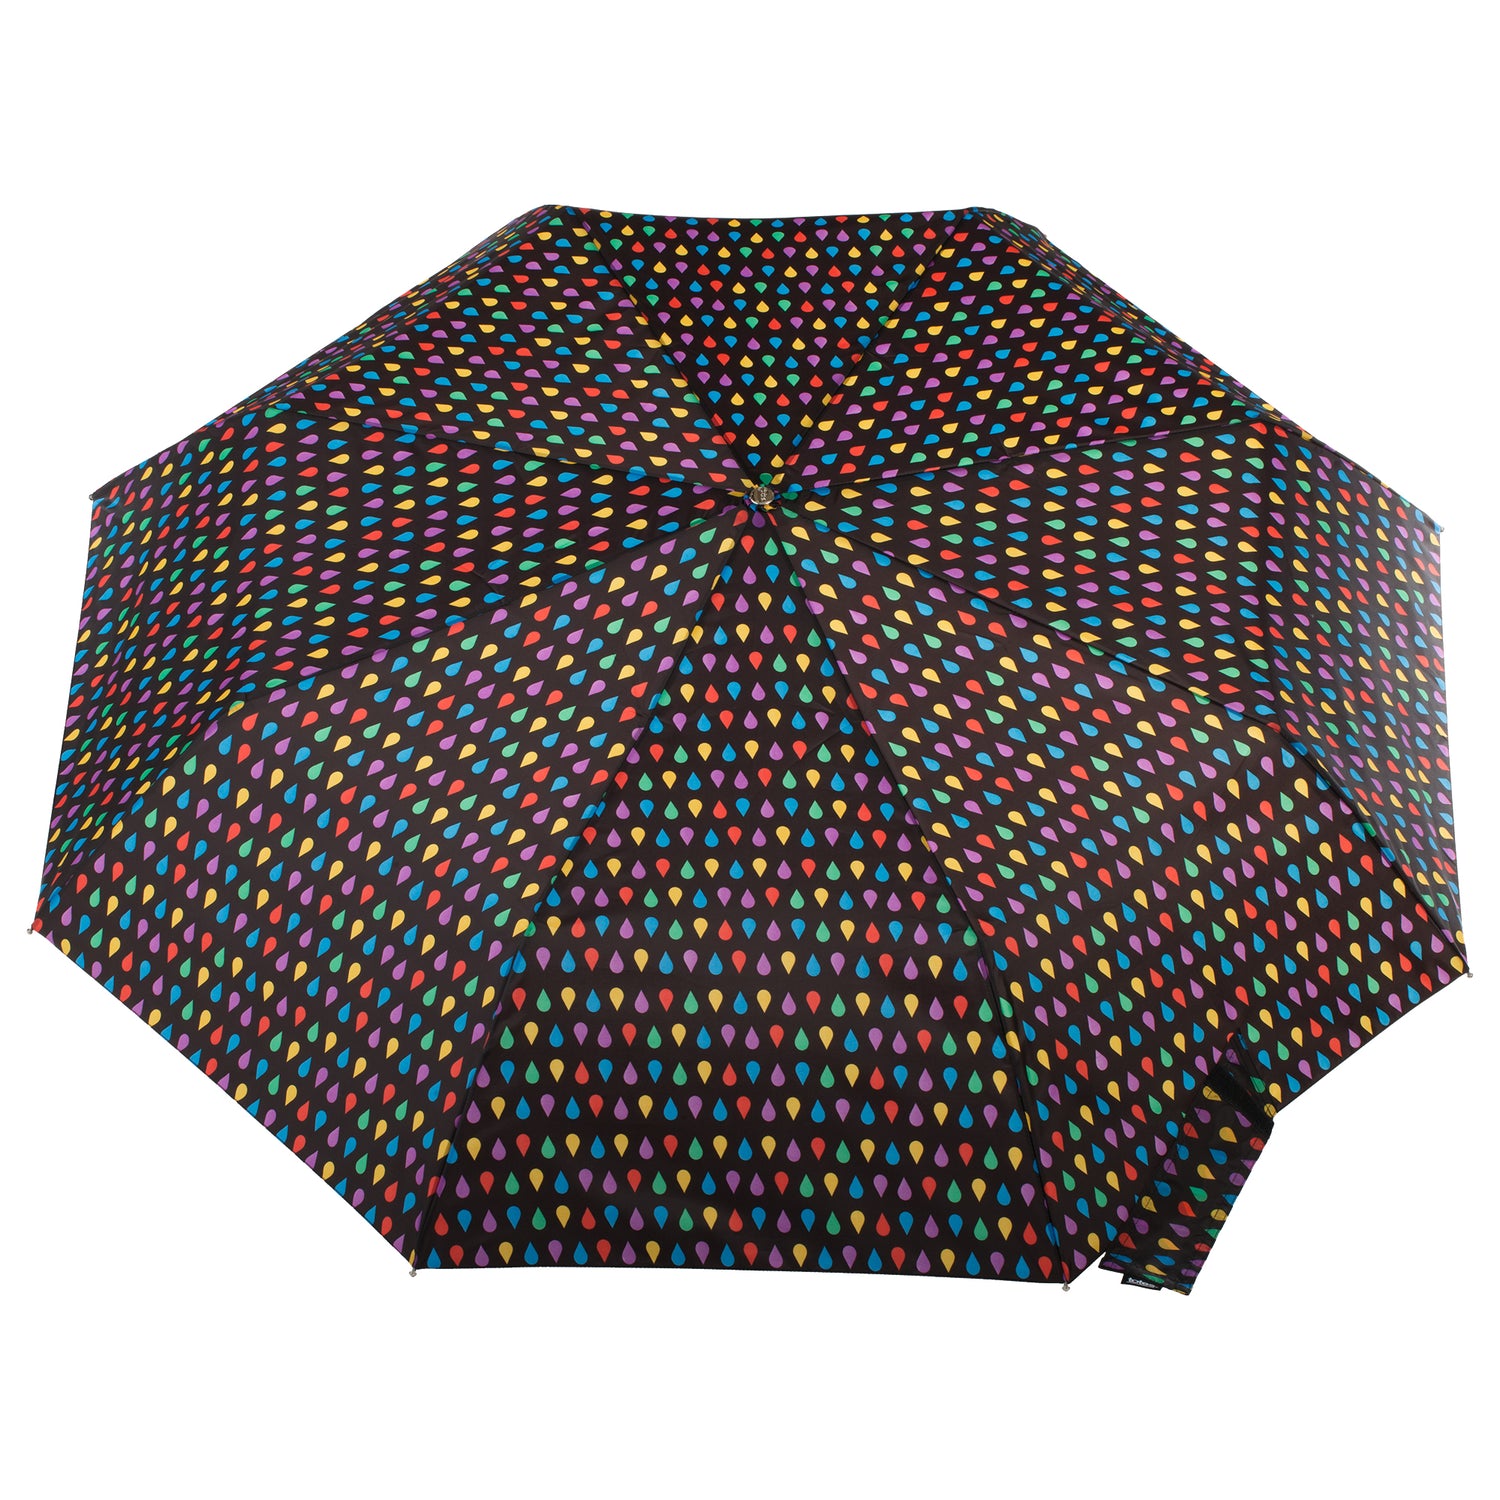 Extra-Large SunGuard® Umbrella with Auto Open/Close Technology